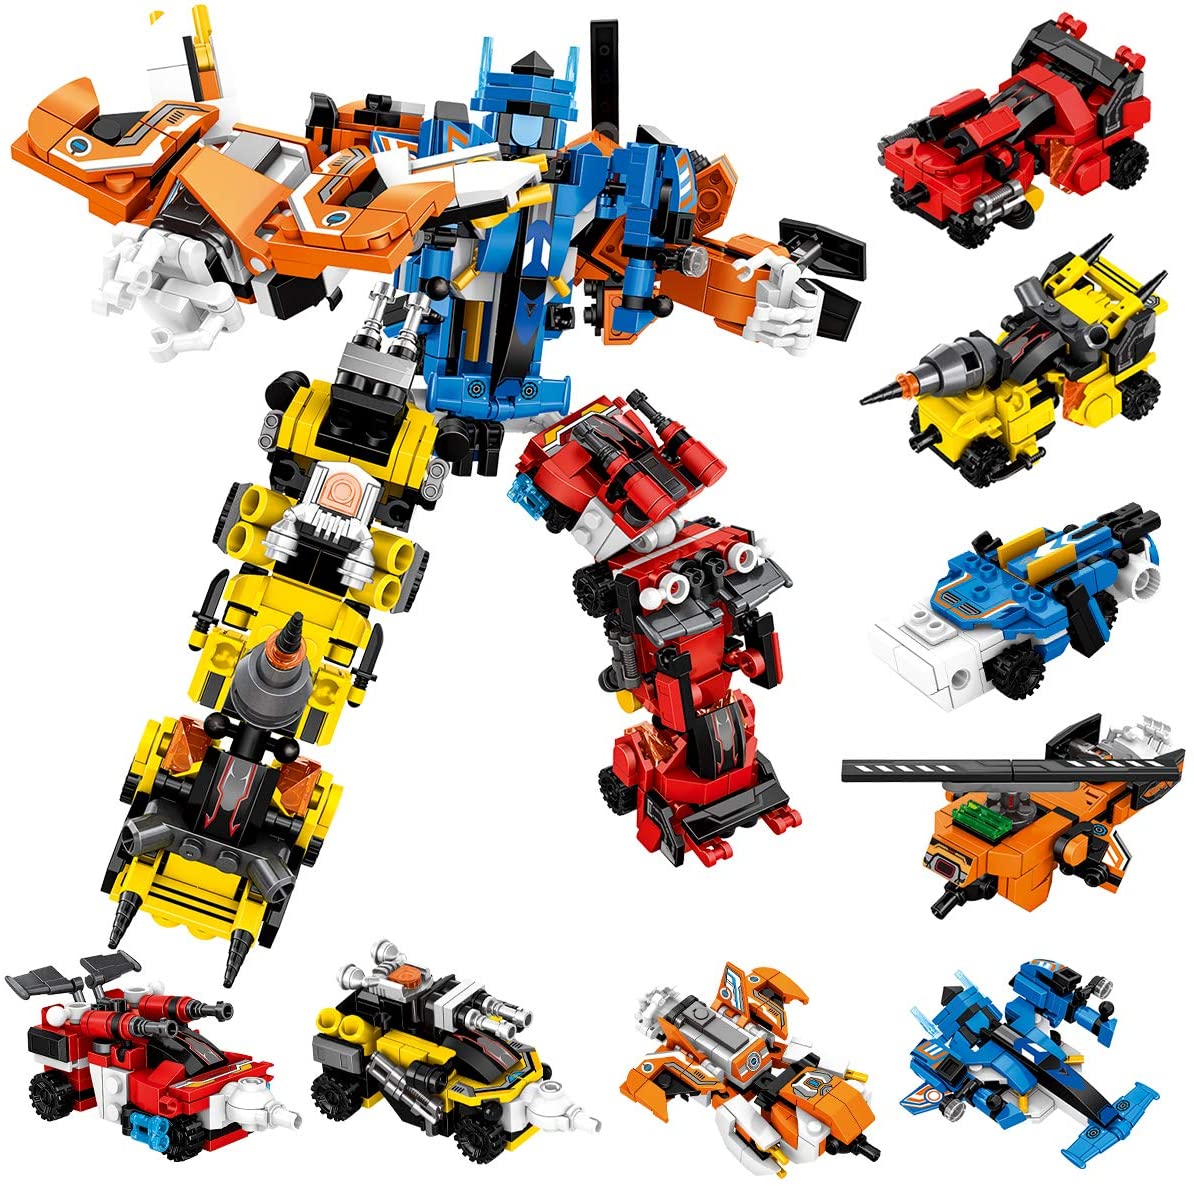 ''PANLOS Robot Building Blocks MODEL Vehicles Kit, STEM Building Bricks Construction Truck CARs Plays